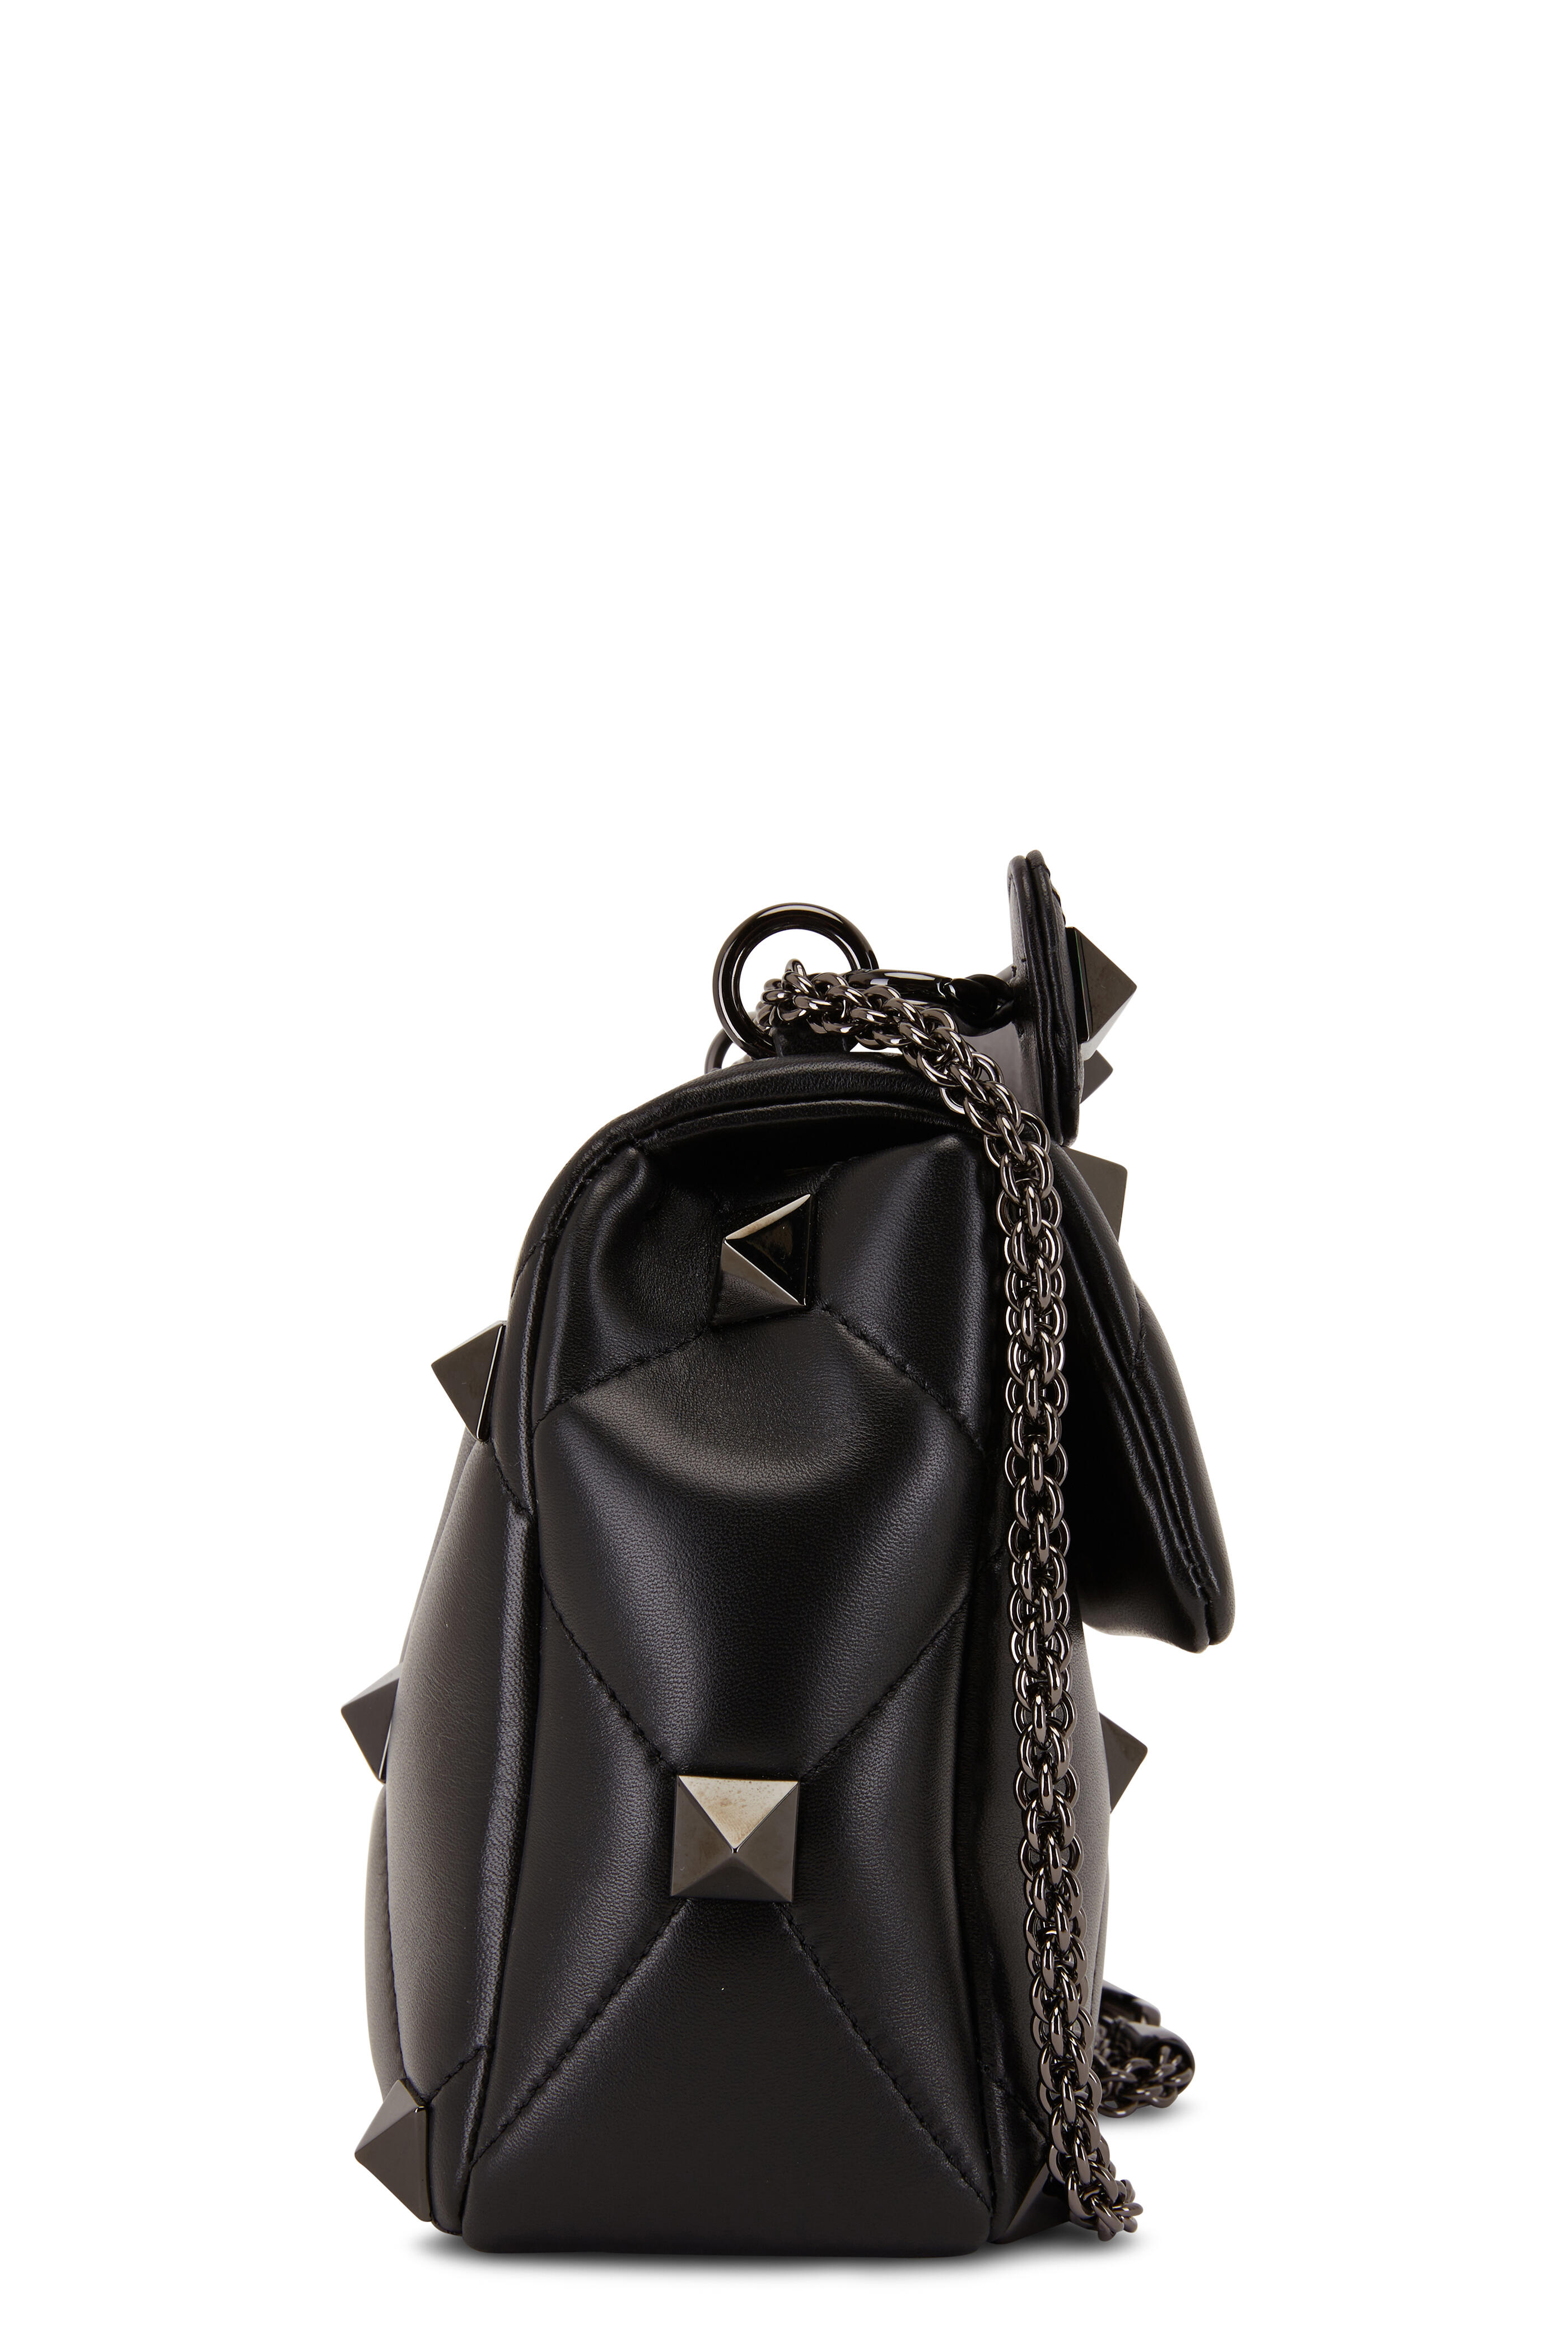 Valentino Garavani Roman Stud Flap Bag Quilted Leather Large Black